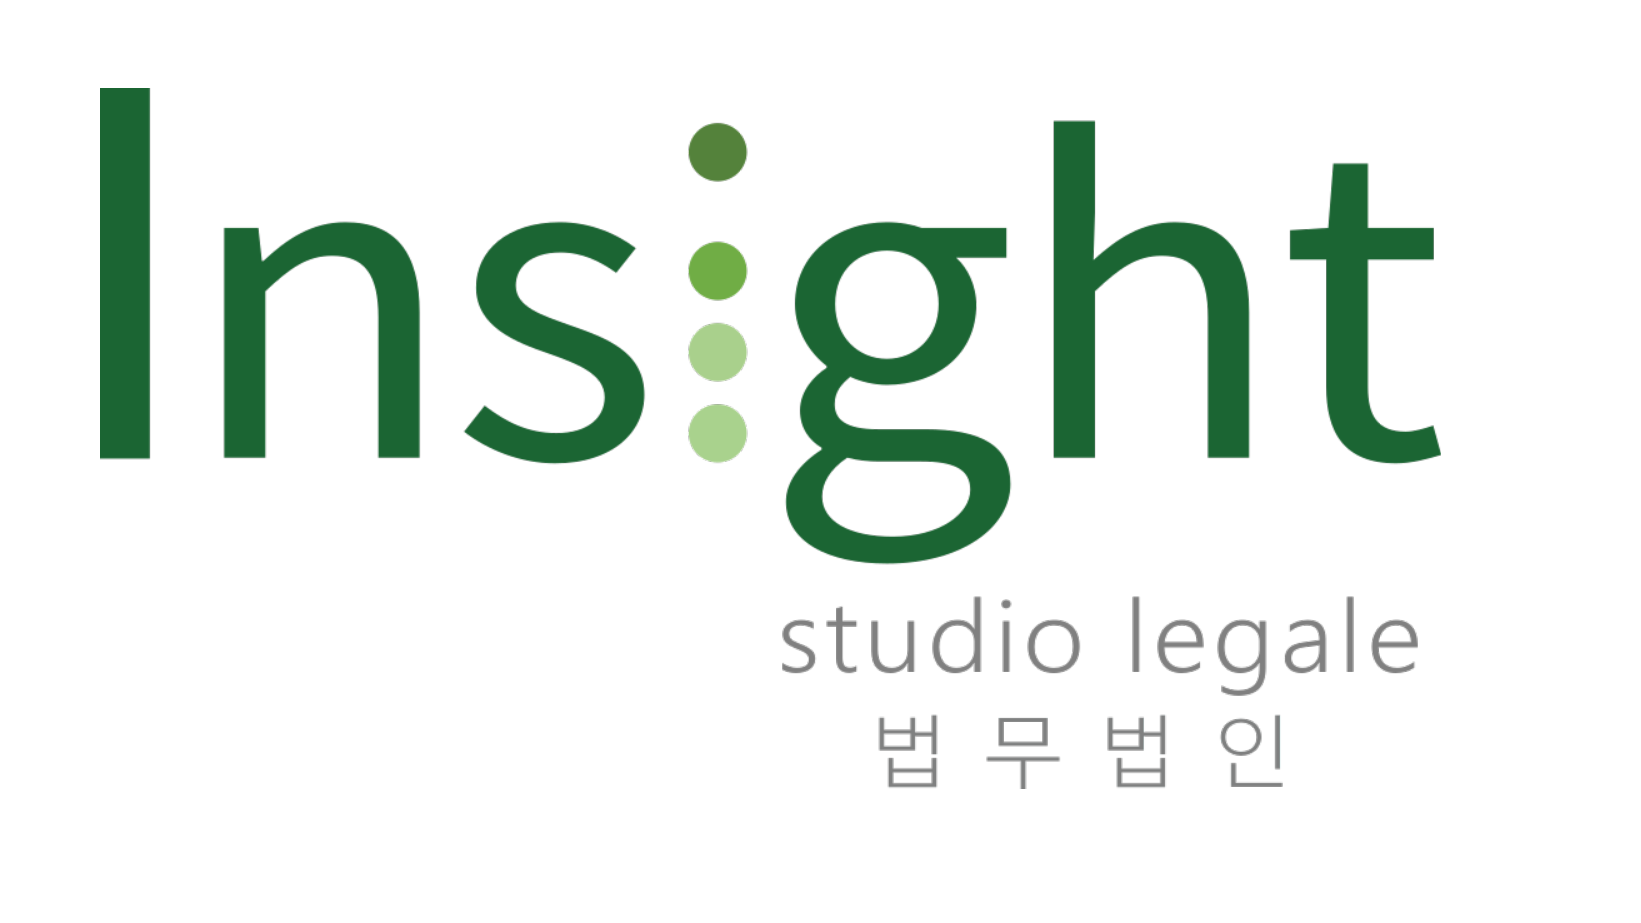 Insight Studio Legale